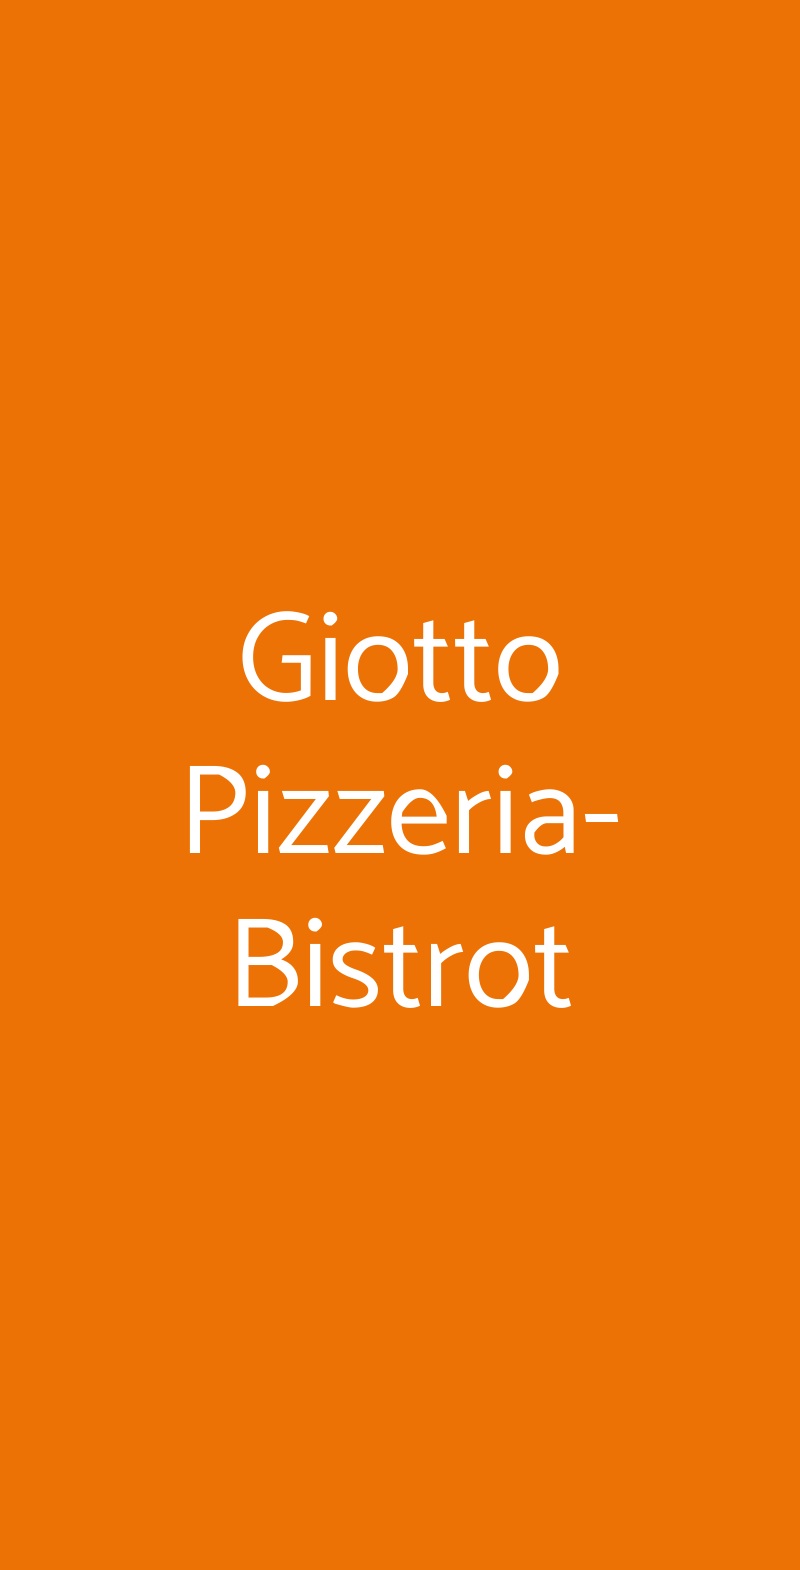 Giotto Pizzeria-Bistrot Firenze menù 1 pagina